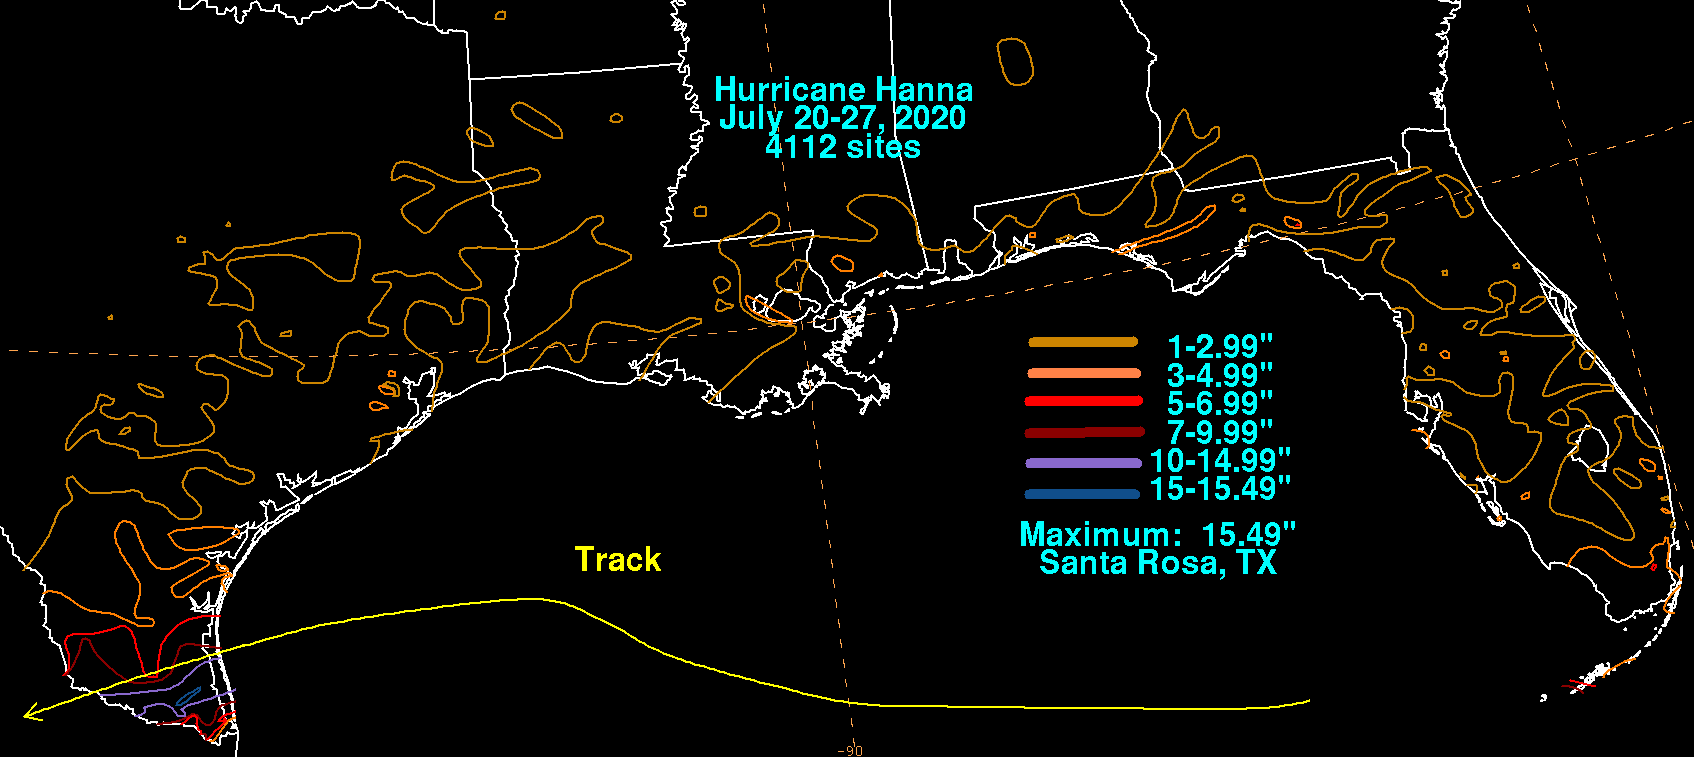 Hurricane Hanna (2020) Rainfall